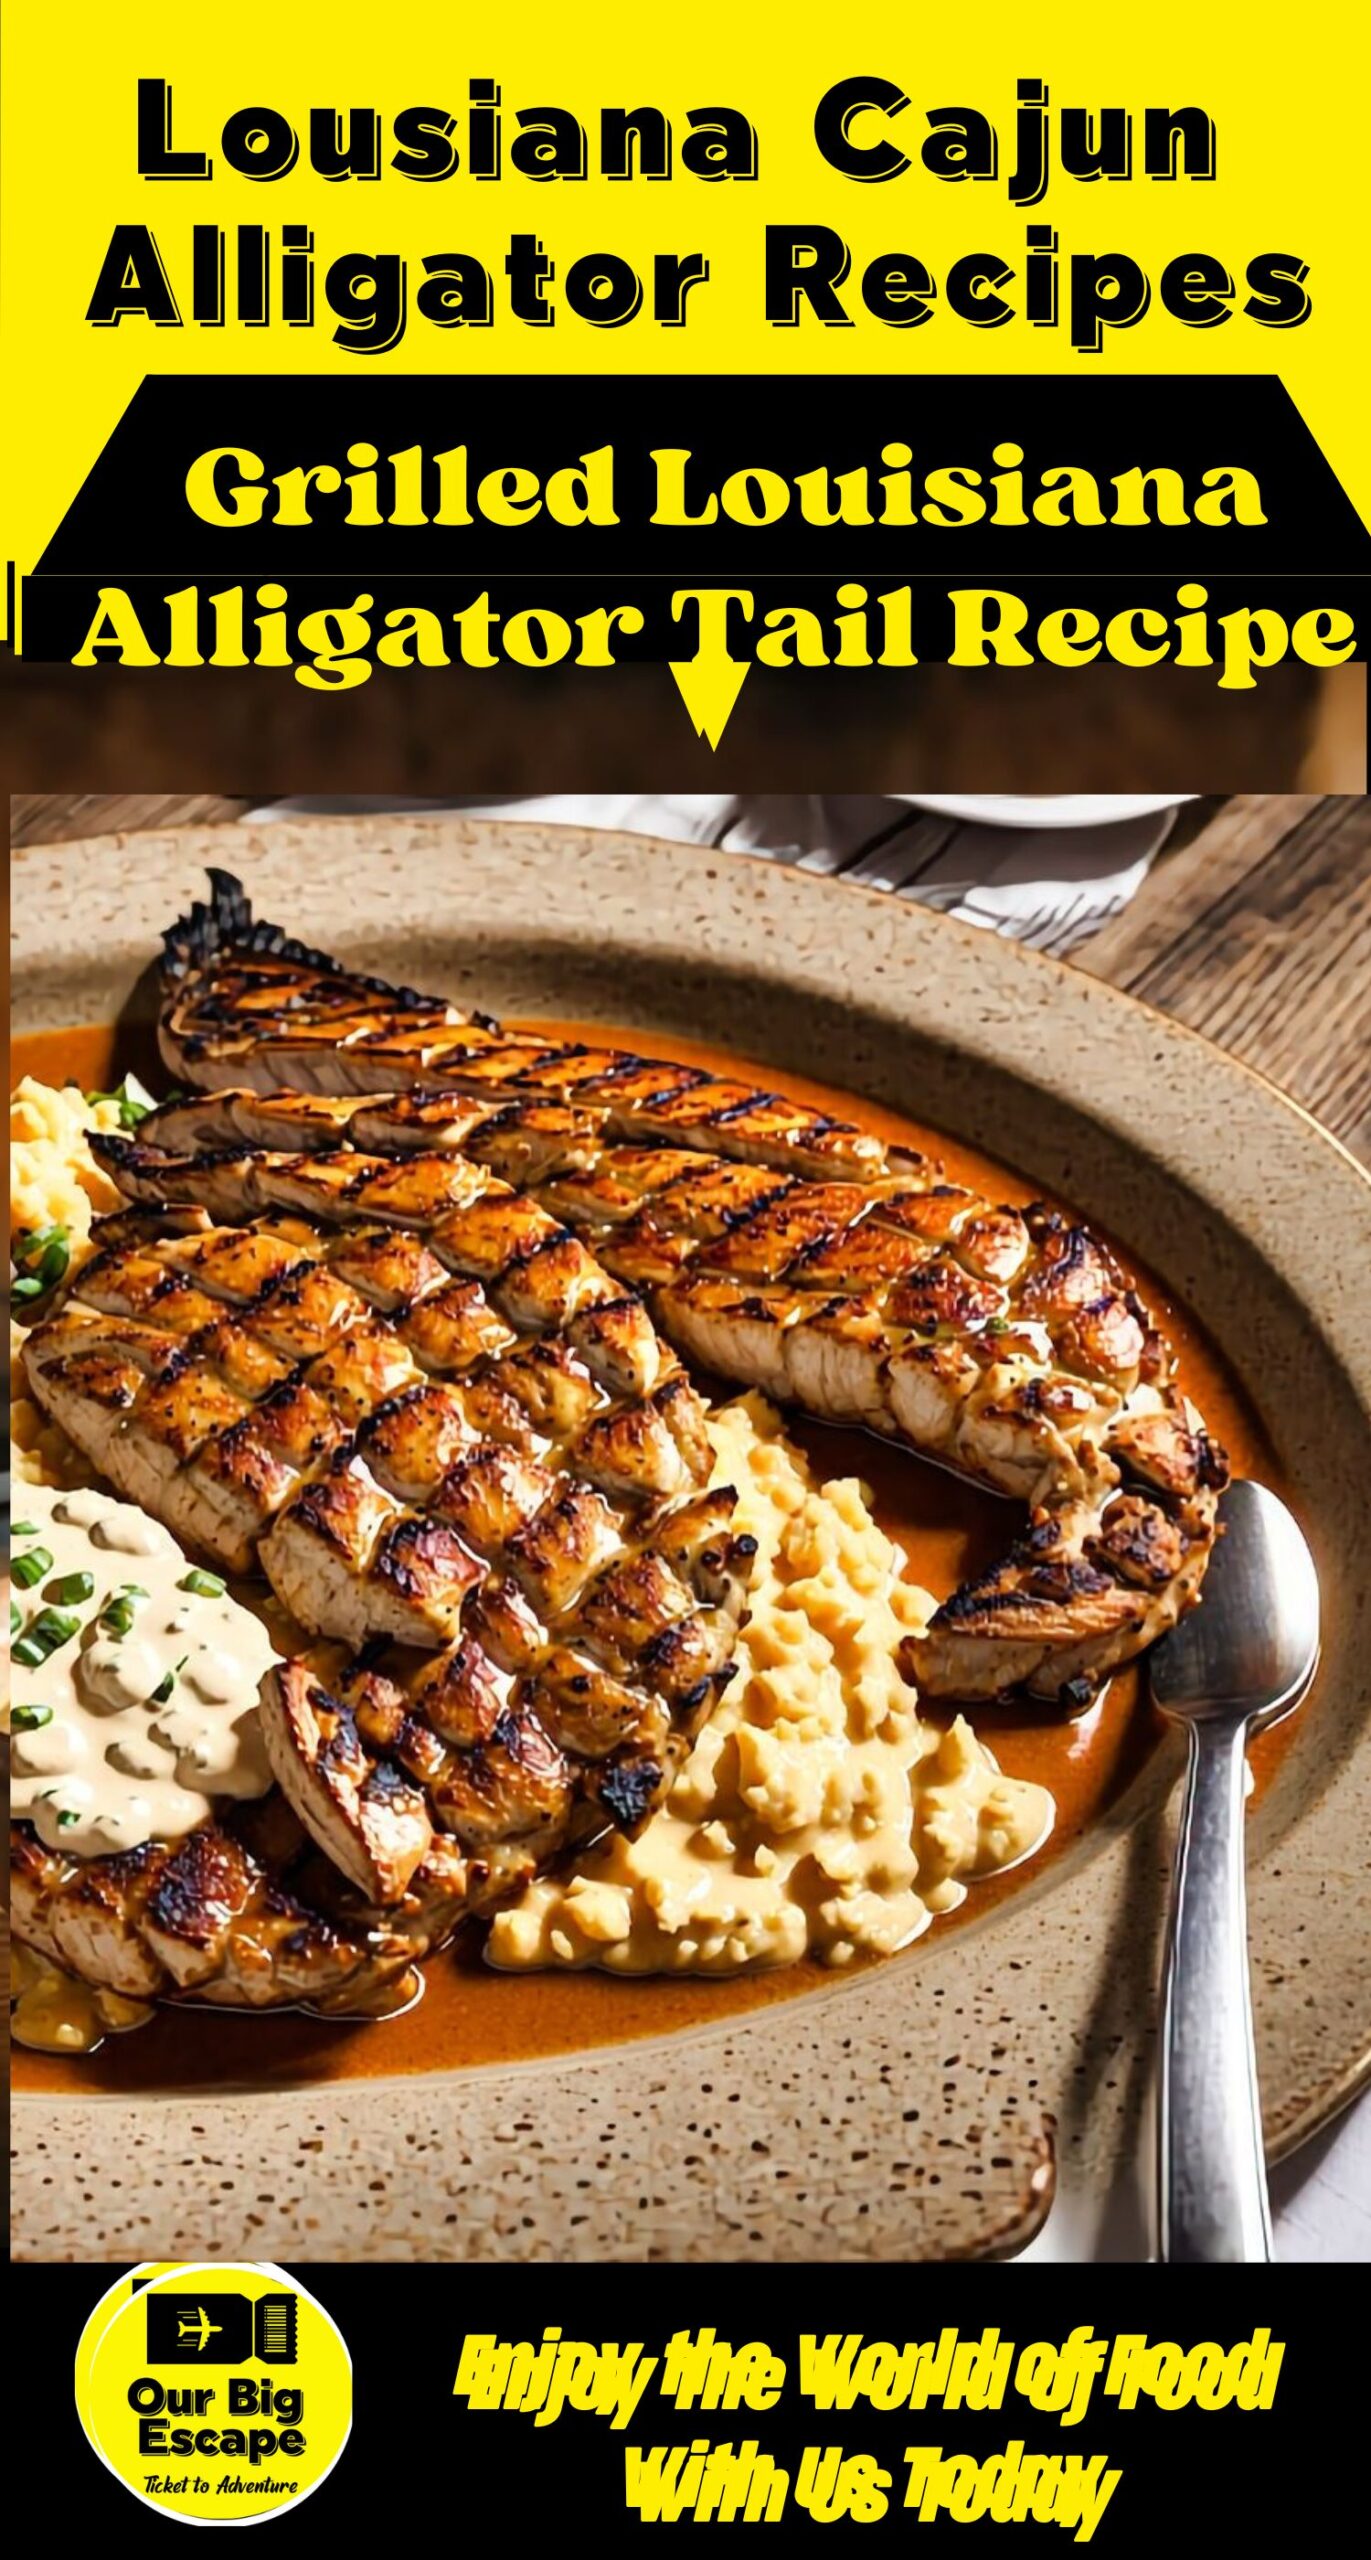 _Grilled Louisiana Alligator Tail Recipe